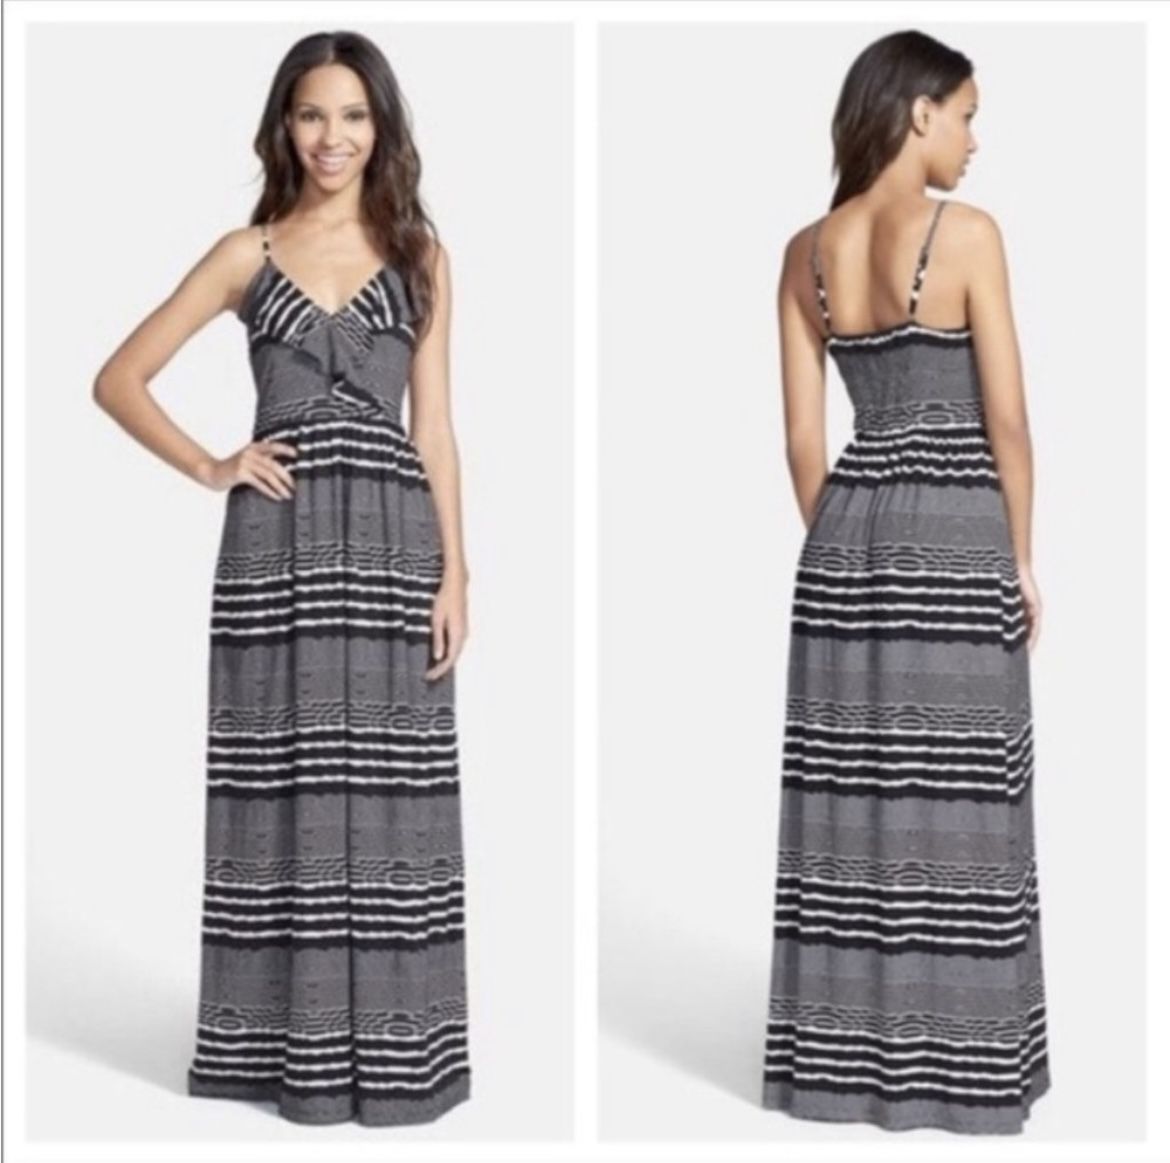 Betsey Johnson Black & White Striped Maxi Dress - Size 6